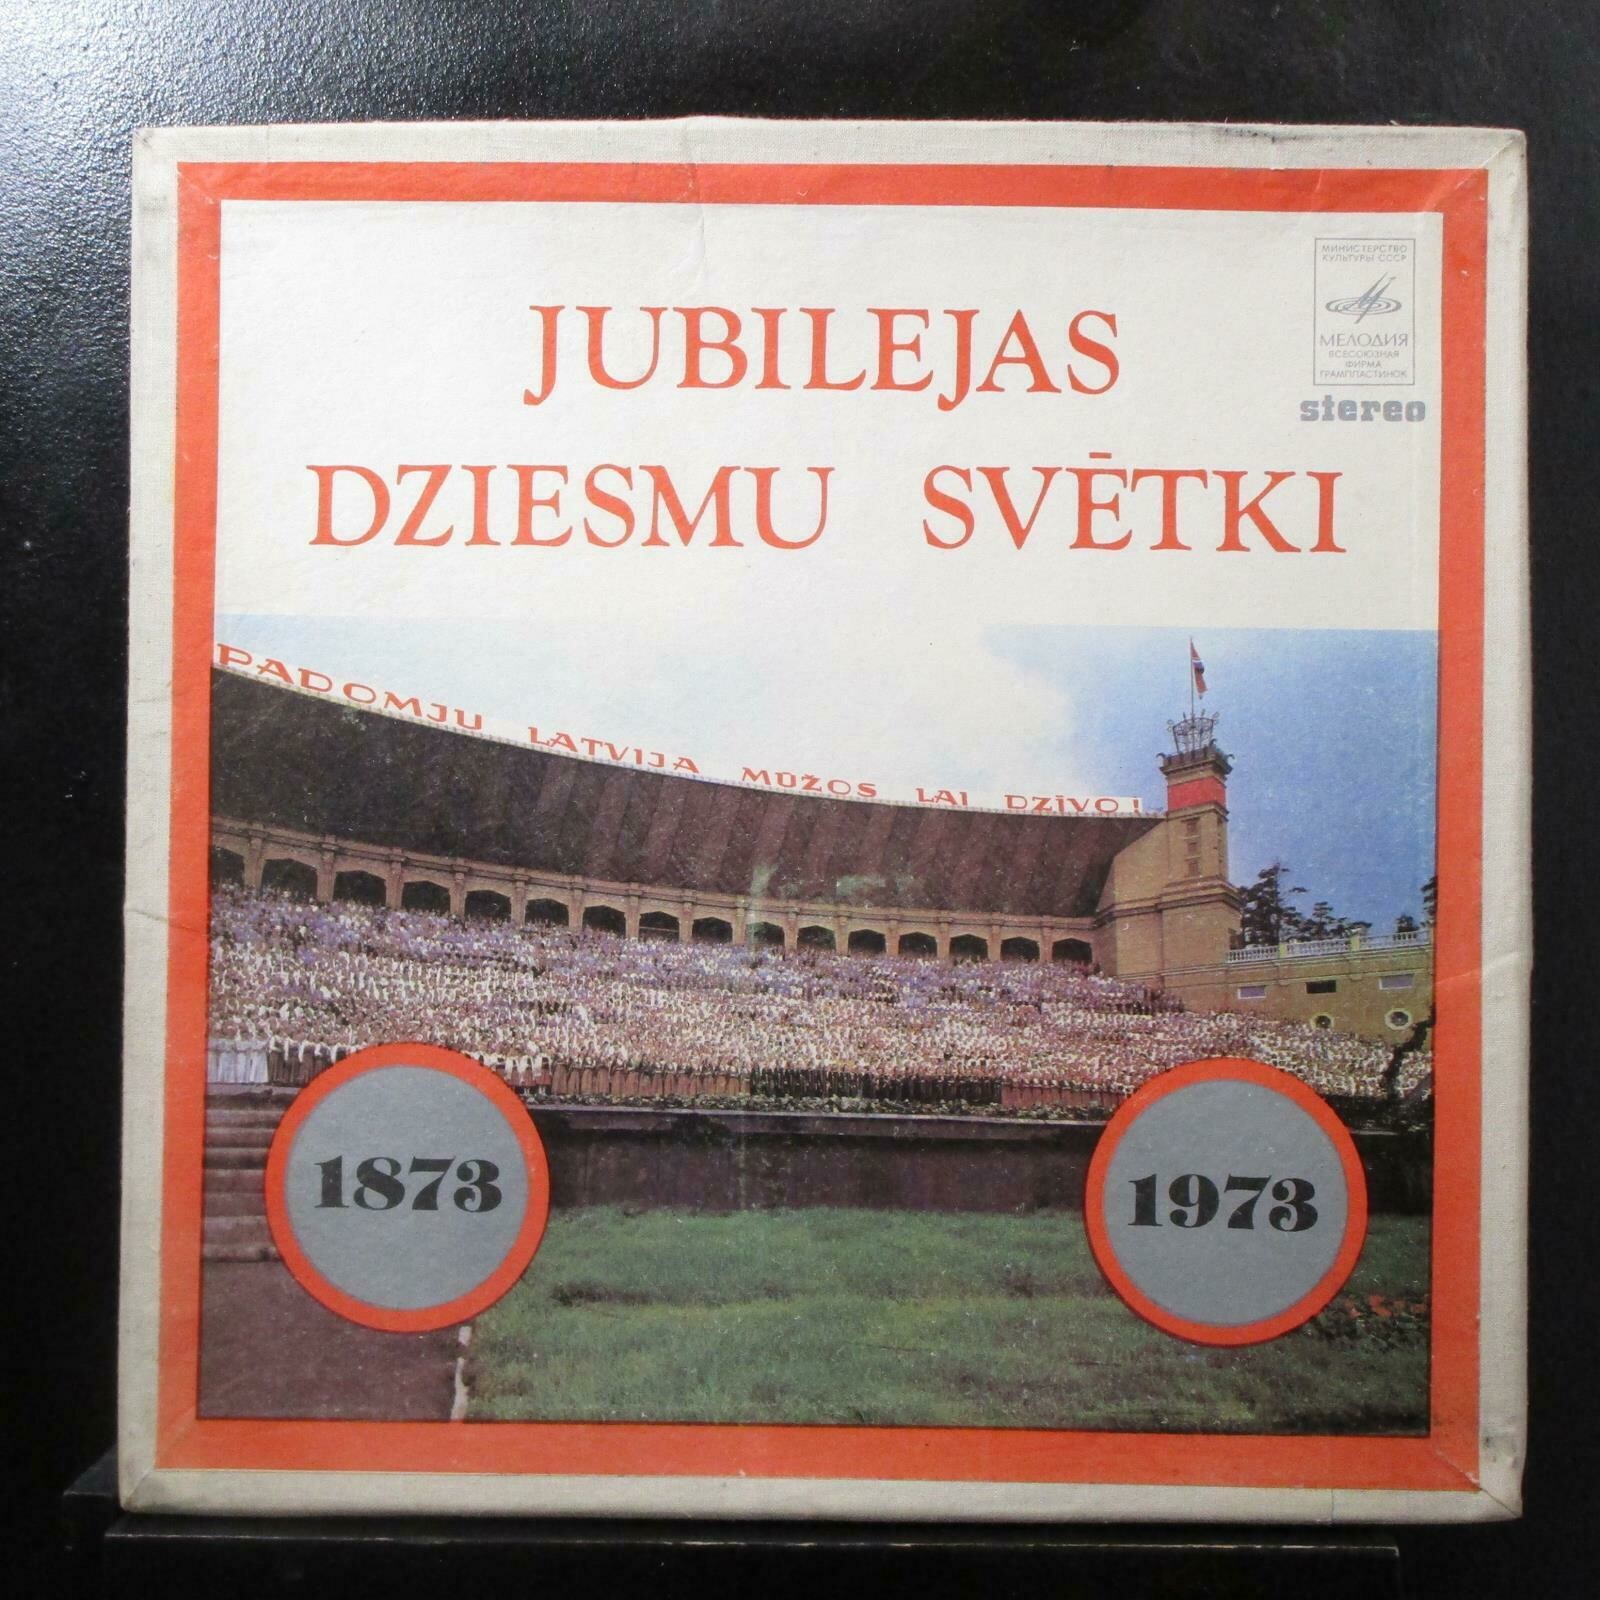 Юбилейный праздник песни / Jubilejas dziesmu svētki (1873—1973), (3 пластинки)